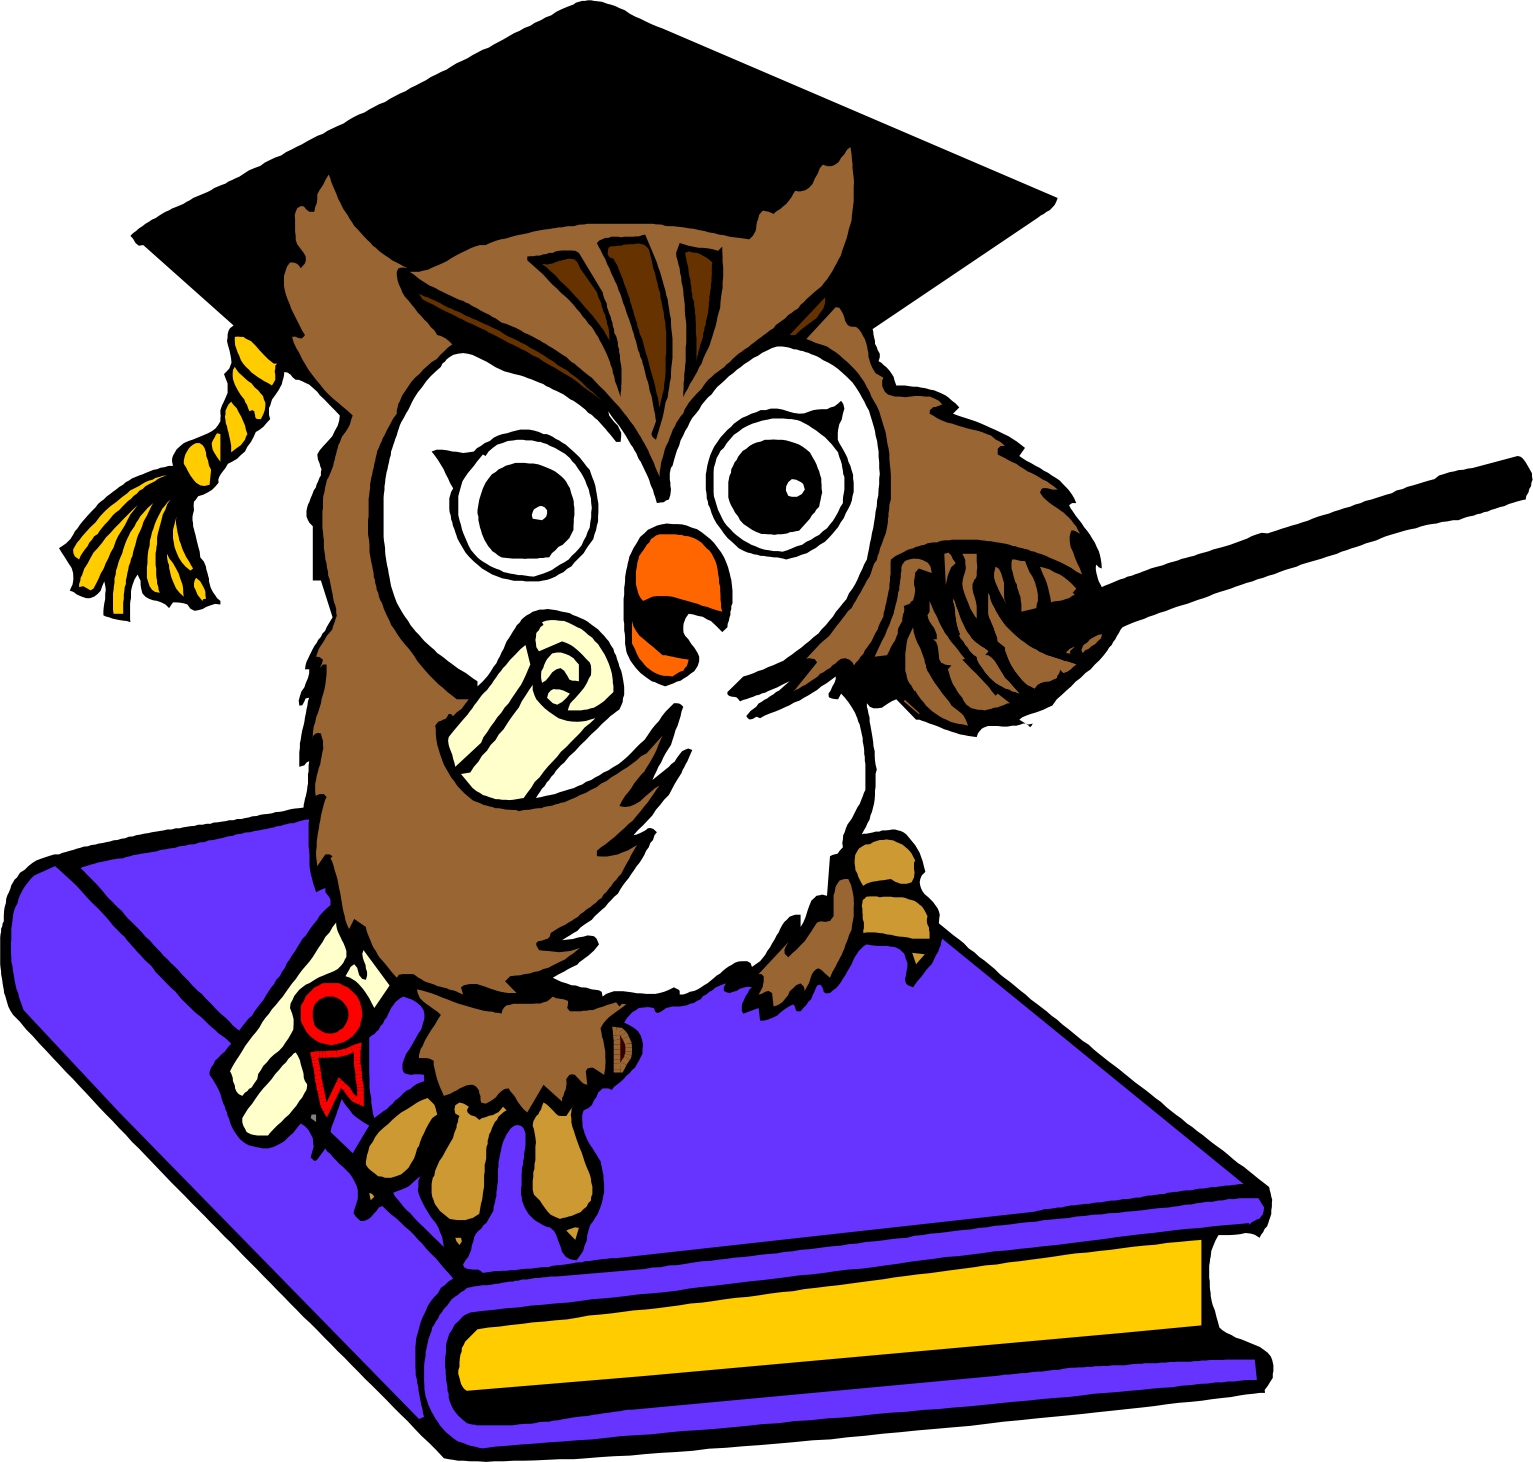 Images Of Cartoon Owls | Free Download Clip Art | Free Clip Art ...